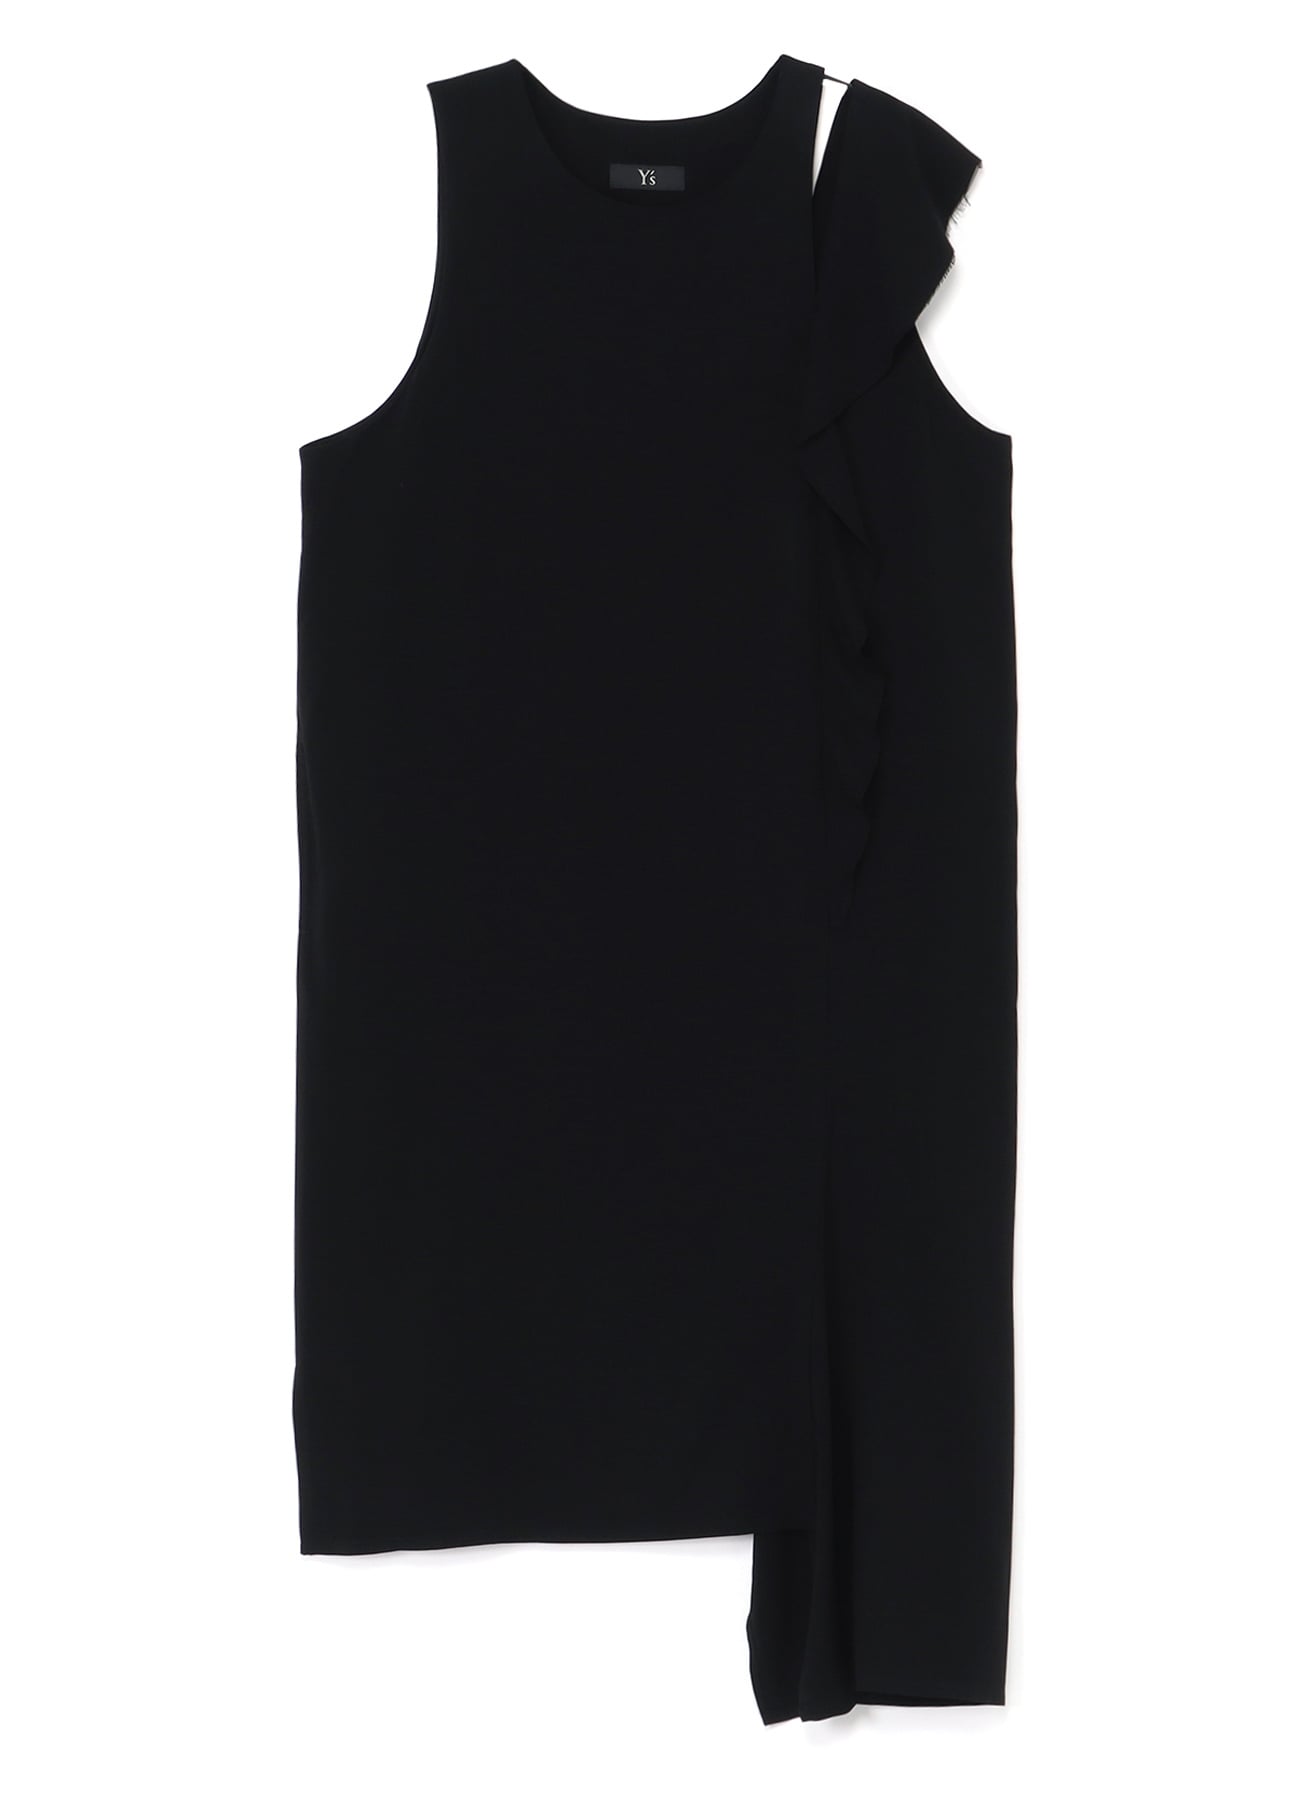 CUPRO/RAYON HIGH-TWIST GABARDINE ASYMMETRIC DECONSTRUCTED DRESS(S Black):  Vintage 1.1｜THE SHOP YOHJI YAMAMOTO